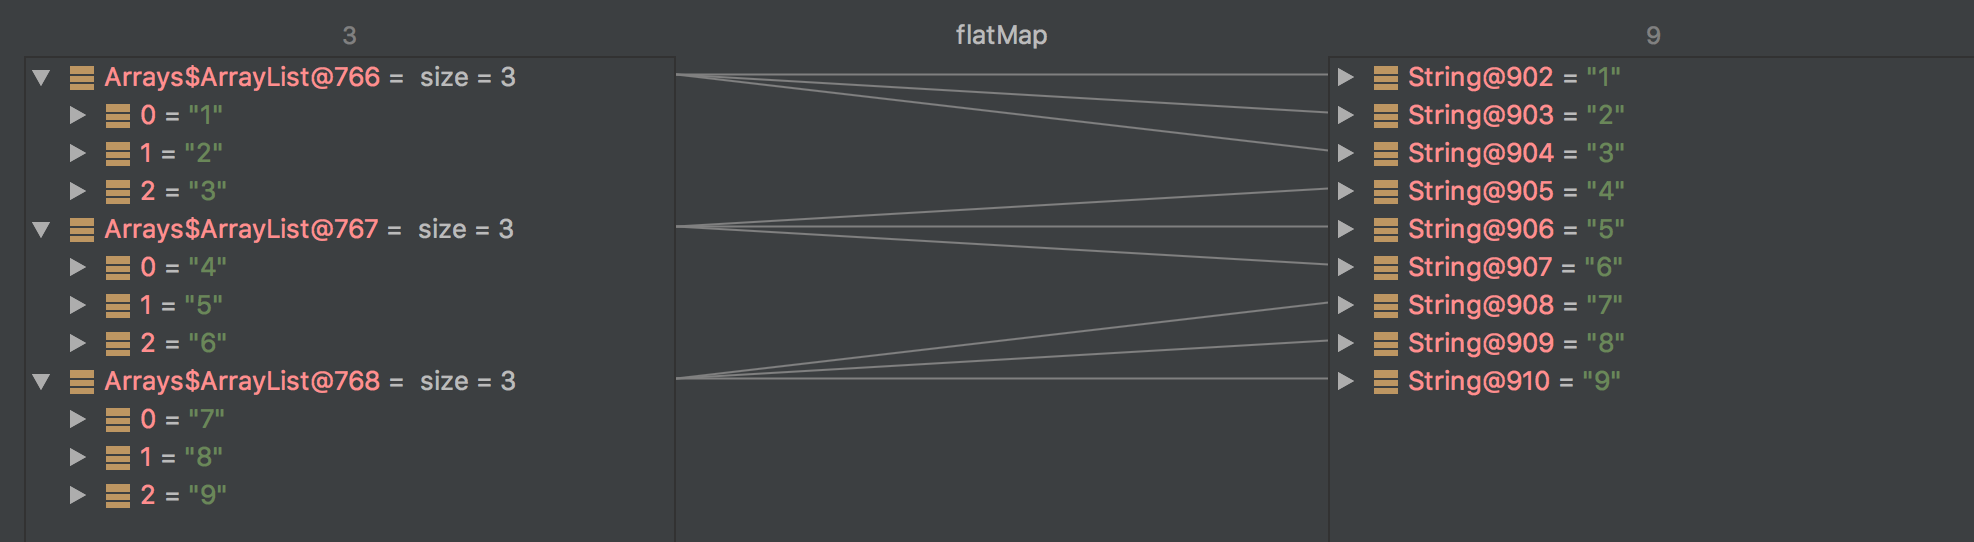 Visual representation of Java's flatMap operation